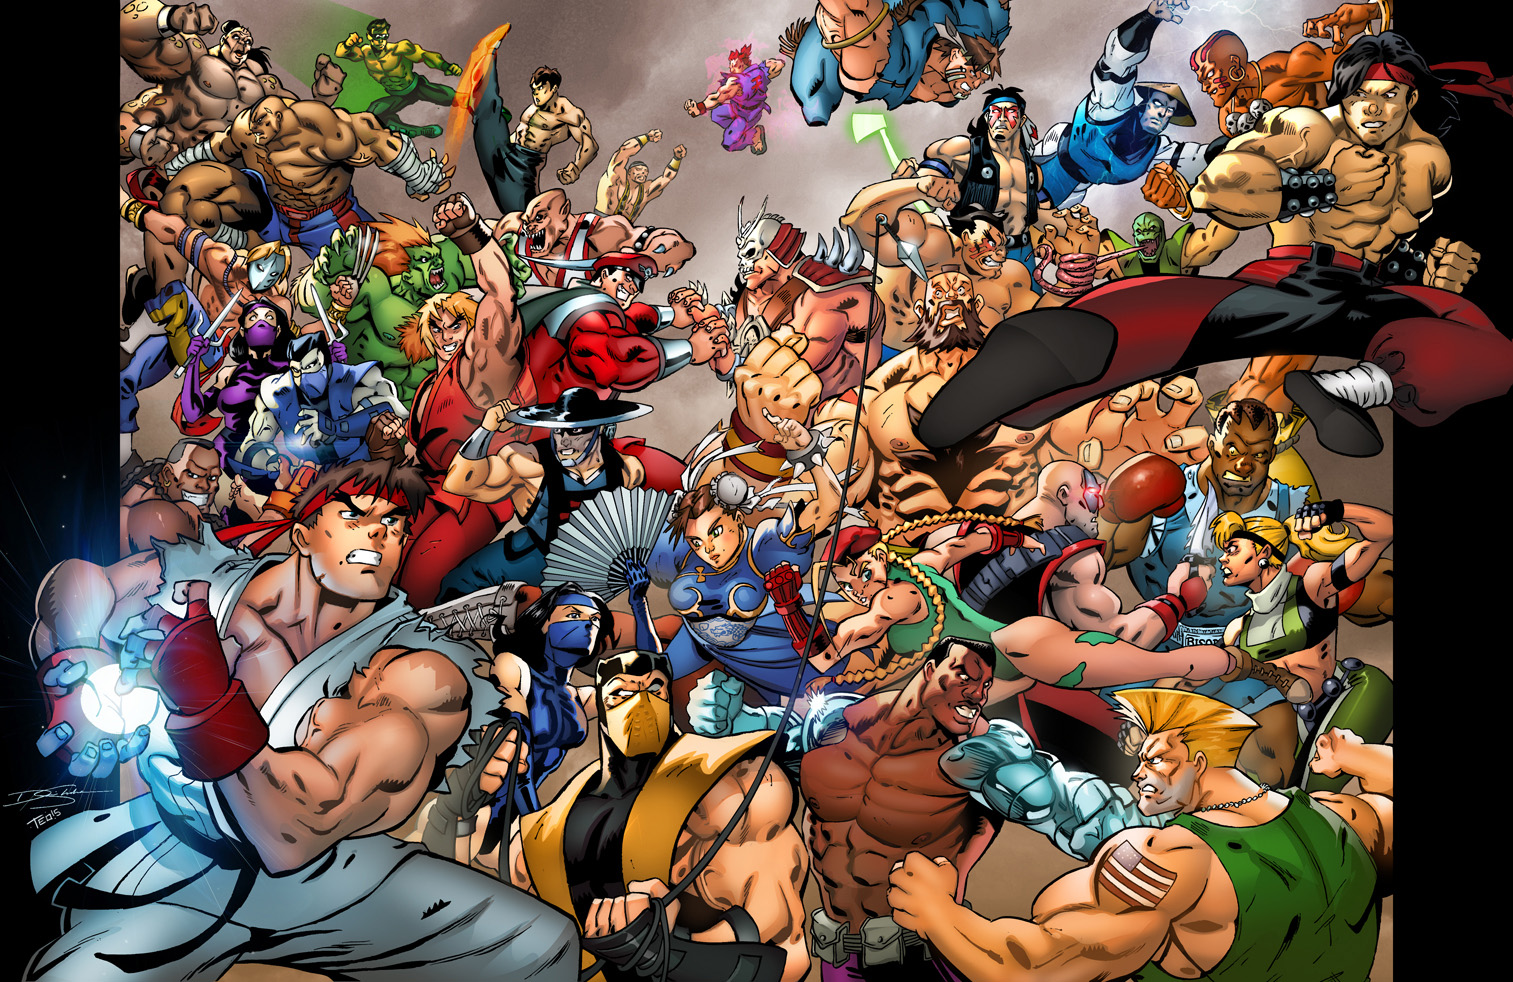 What's your favorite fighting game? 🔘 Tekken 🔘 Mortal Kombat